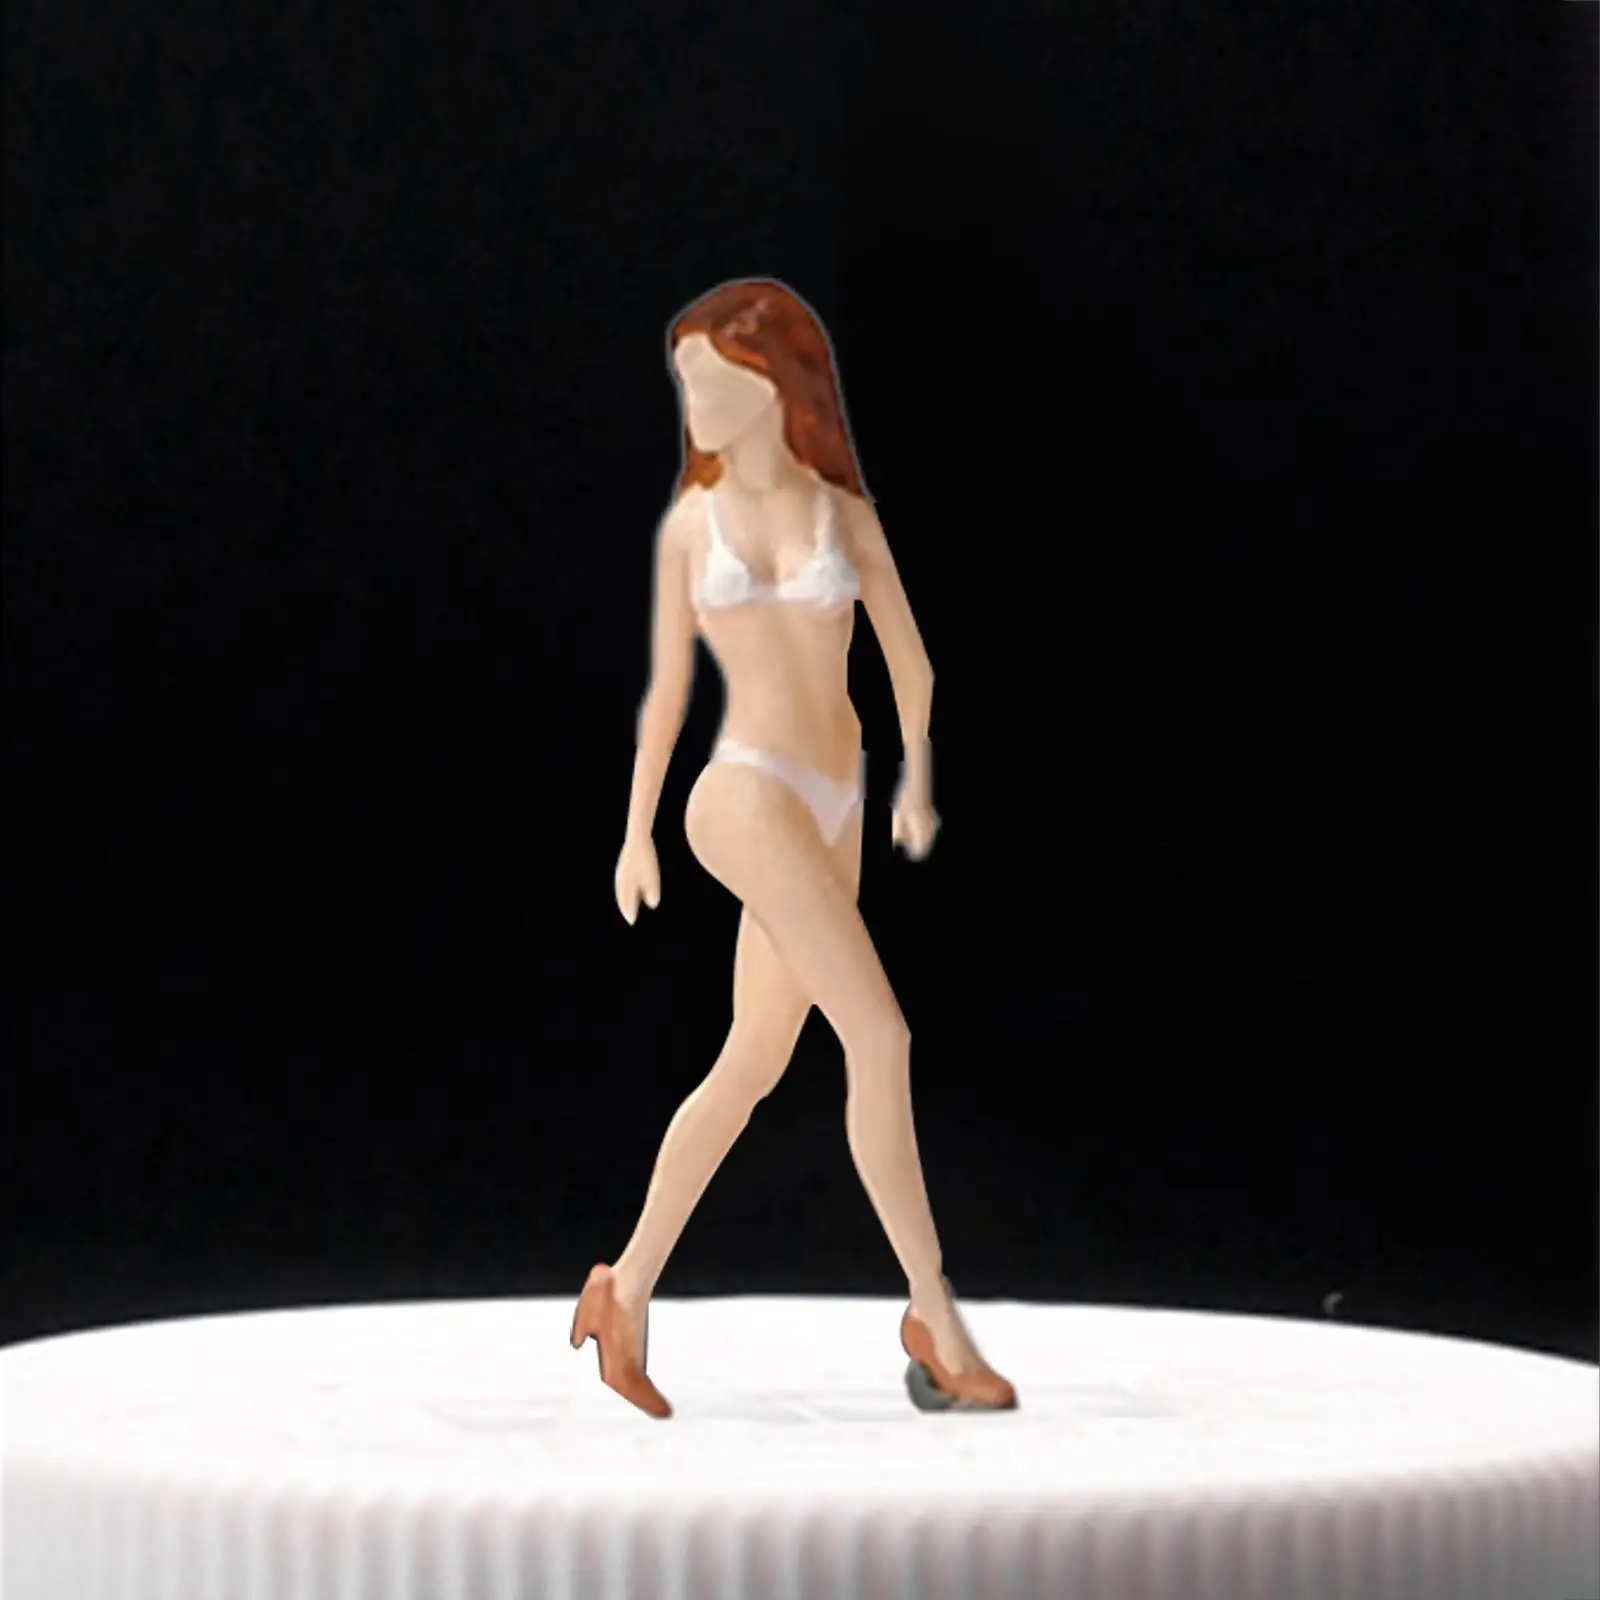 1/64 Scale Miniature Model Figures Realistic Figures 1/64 Scale Models Figurine for Miniature Scenes Sand Table Layout Decor